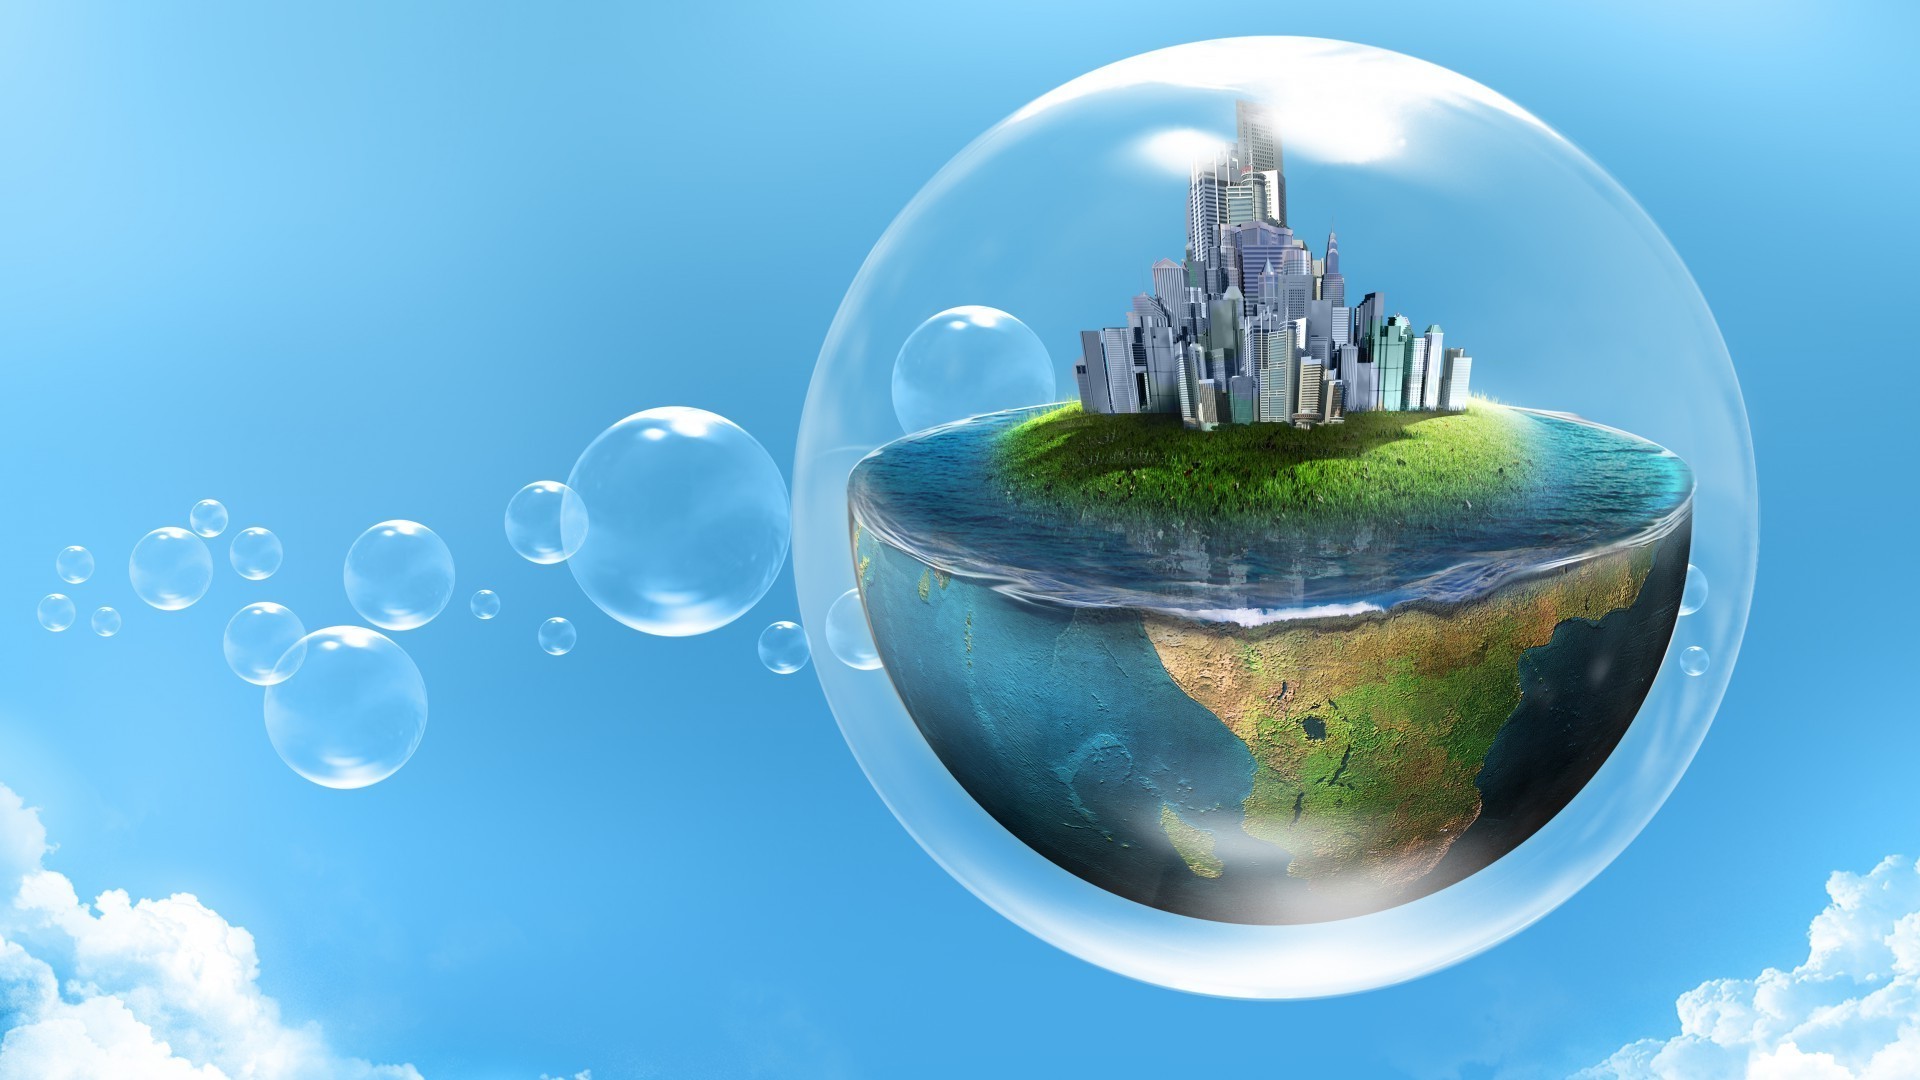 photo manipulation sphere ball-shaped water spherical nature desktop glass environment sky